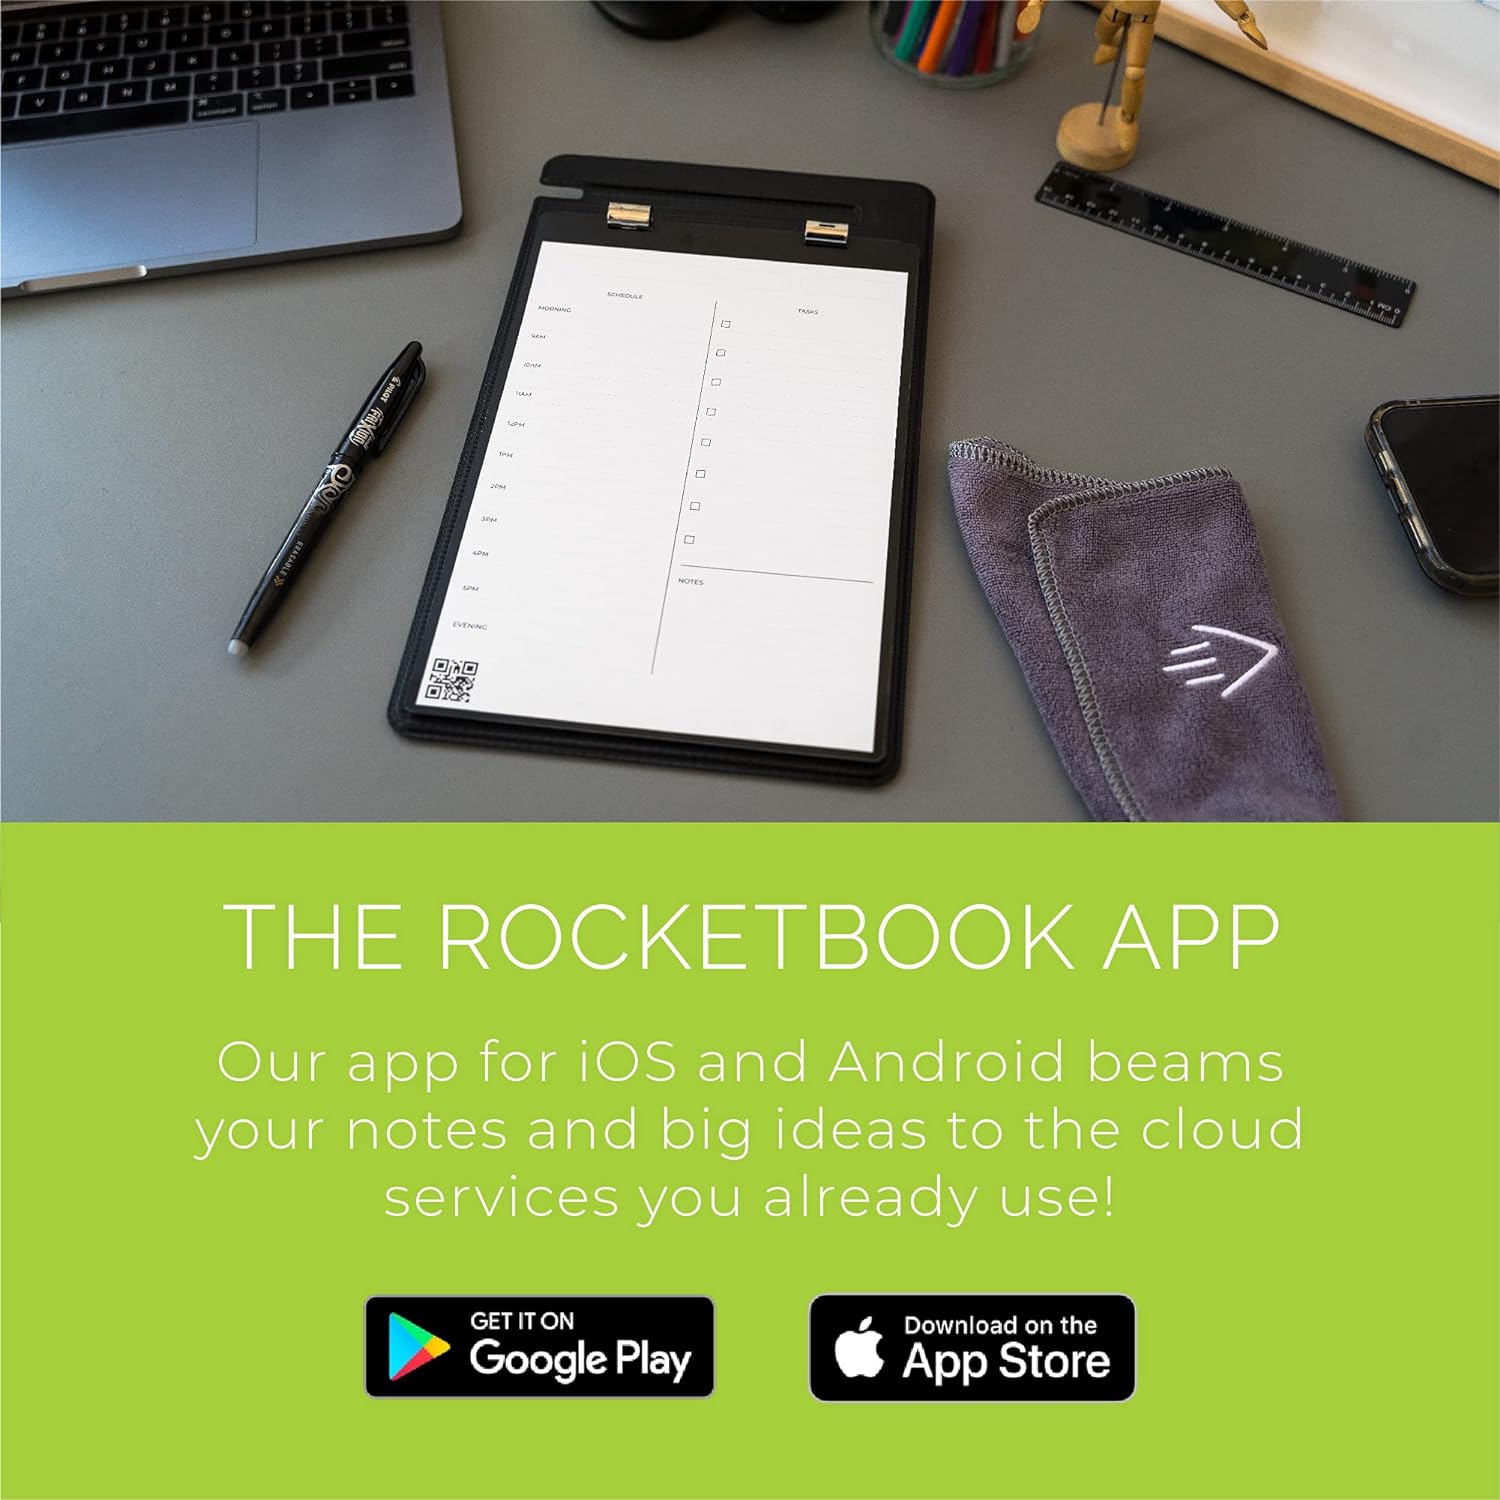 Rocketbook Orbit Legal Pad Executive - Smart Reusable Legal Pad - Teal, Lined\\/Do